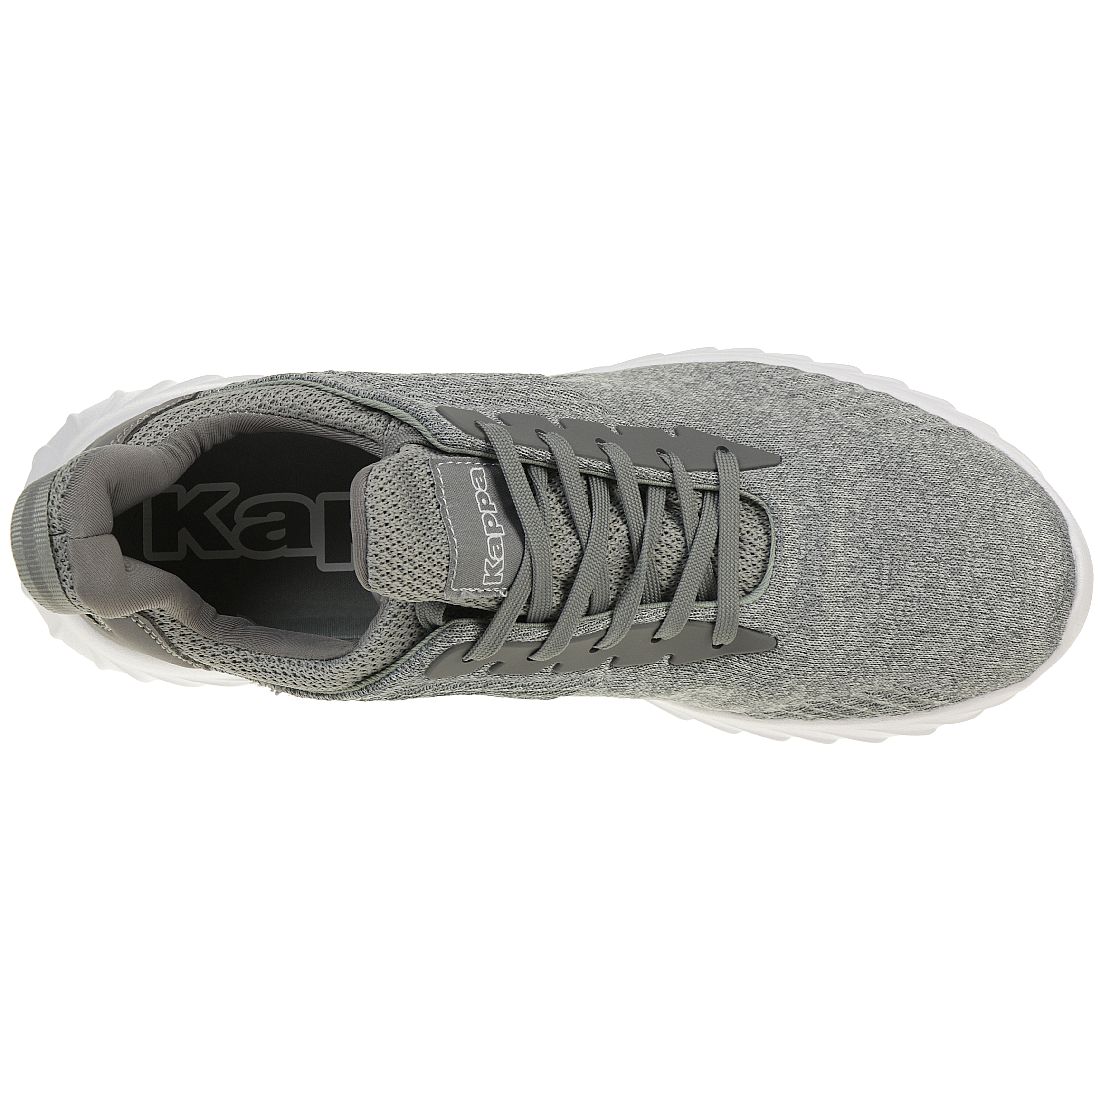 Kappa 242725 Sneaker Unisex Turnschuhe Schuhe grau